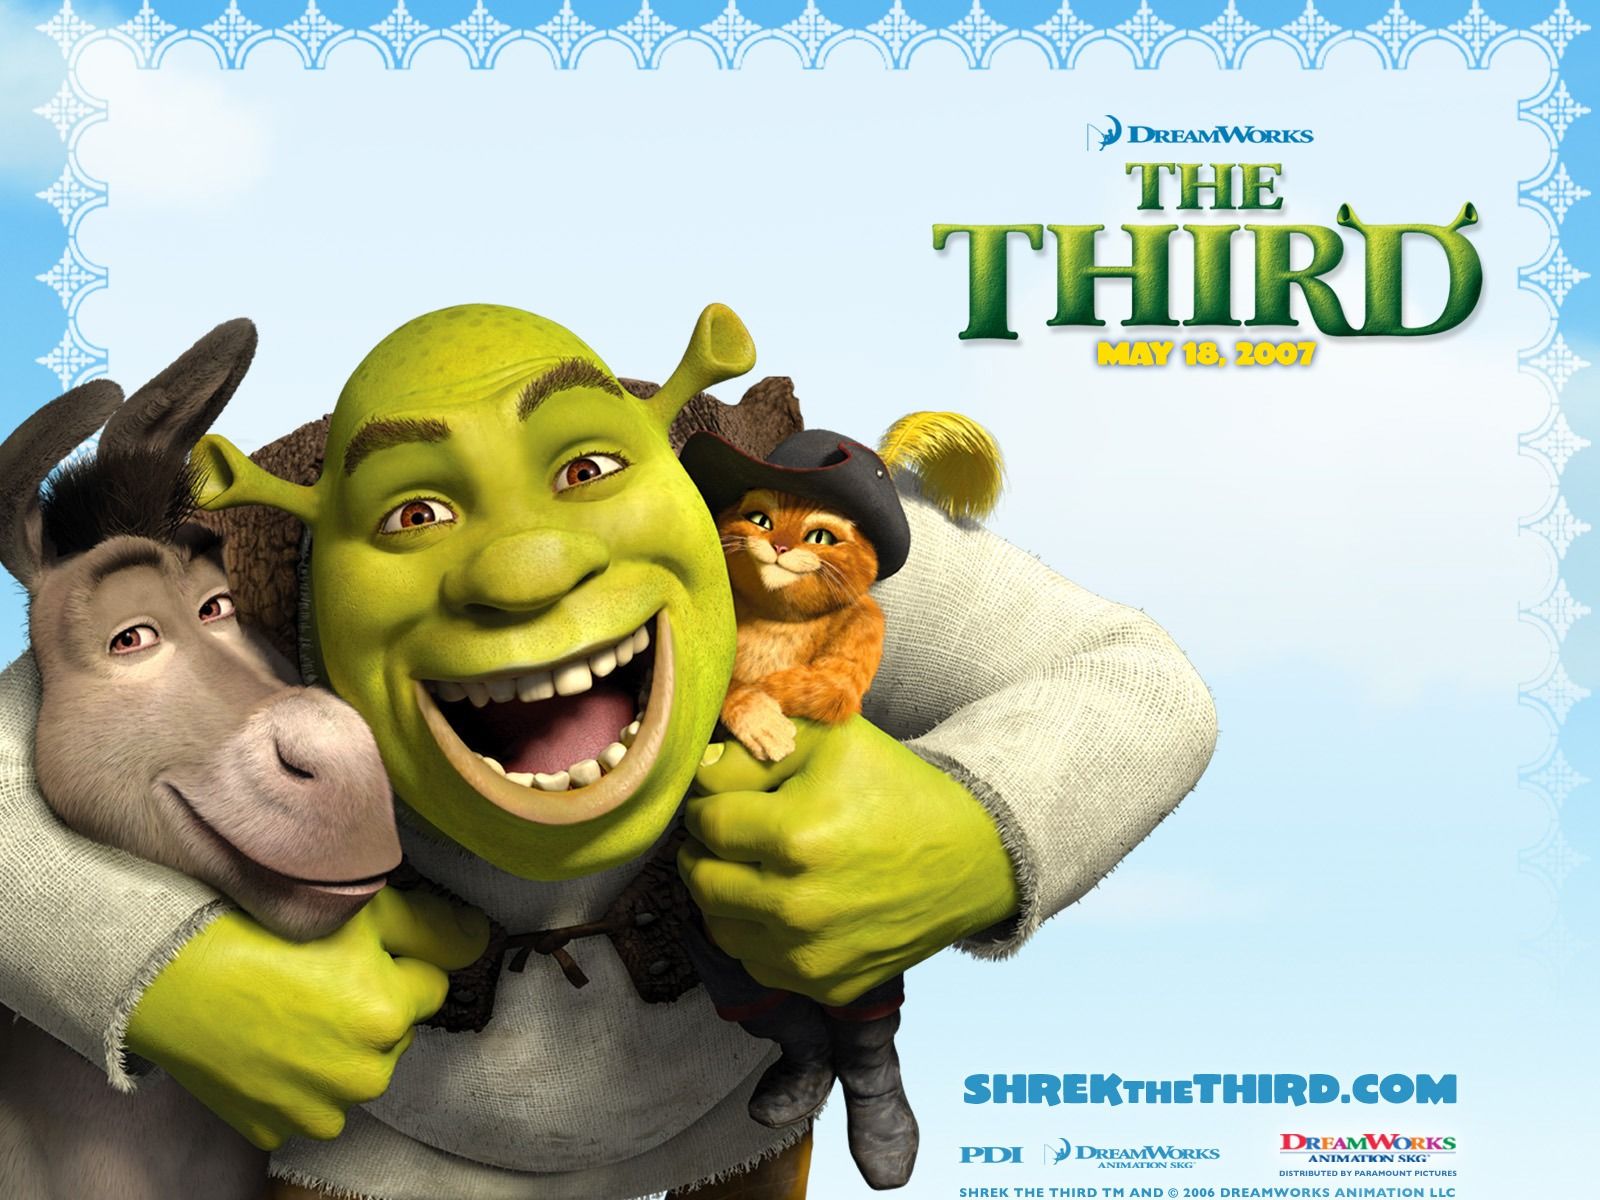 Shrek the Third Wallpaper Shrek 3 Movies Wallpaper in jpg format for free download